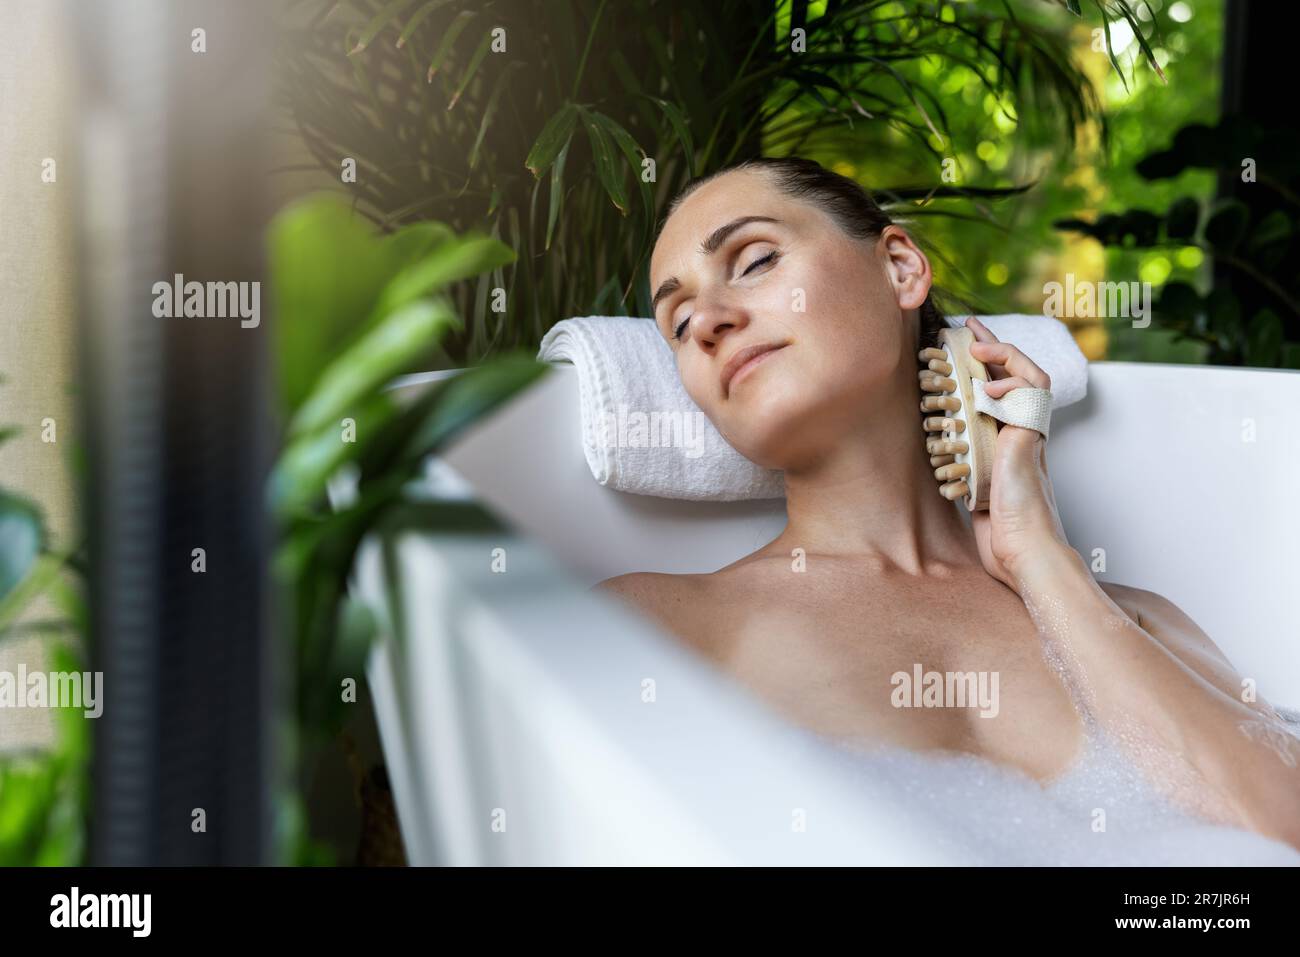 woman enjoying wellness spa bath with body massage brush Stock Photo